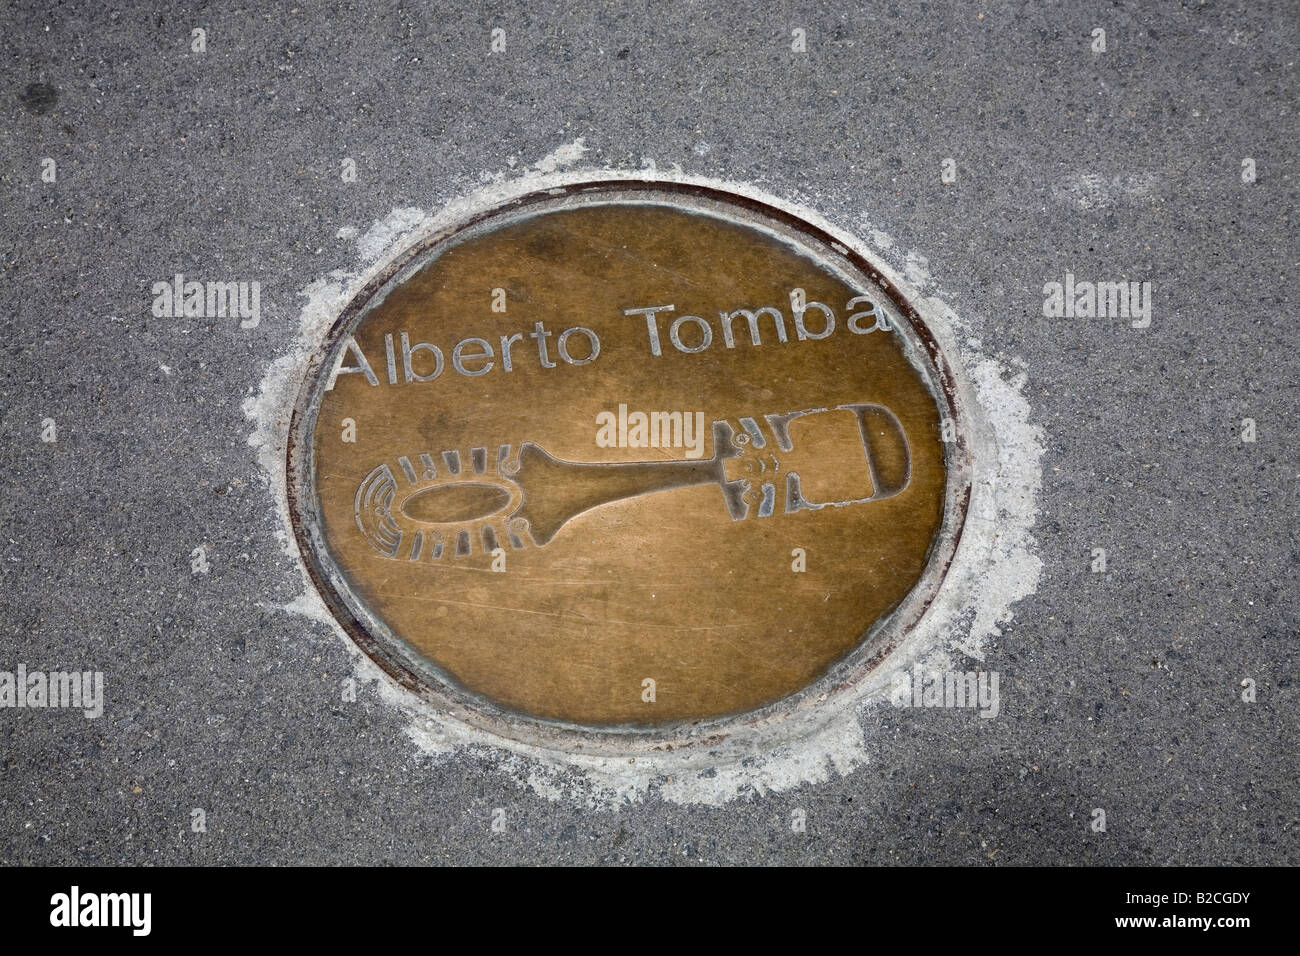 Alberto Tomba footprints at the Olympic Stadium Barcelona Spain May 2008 Stock Photo